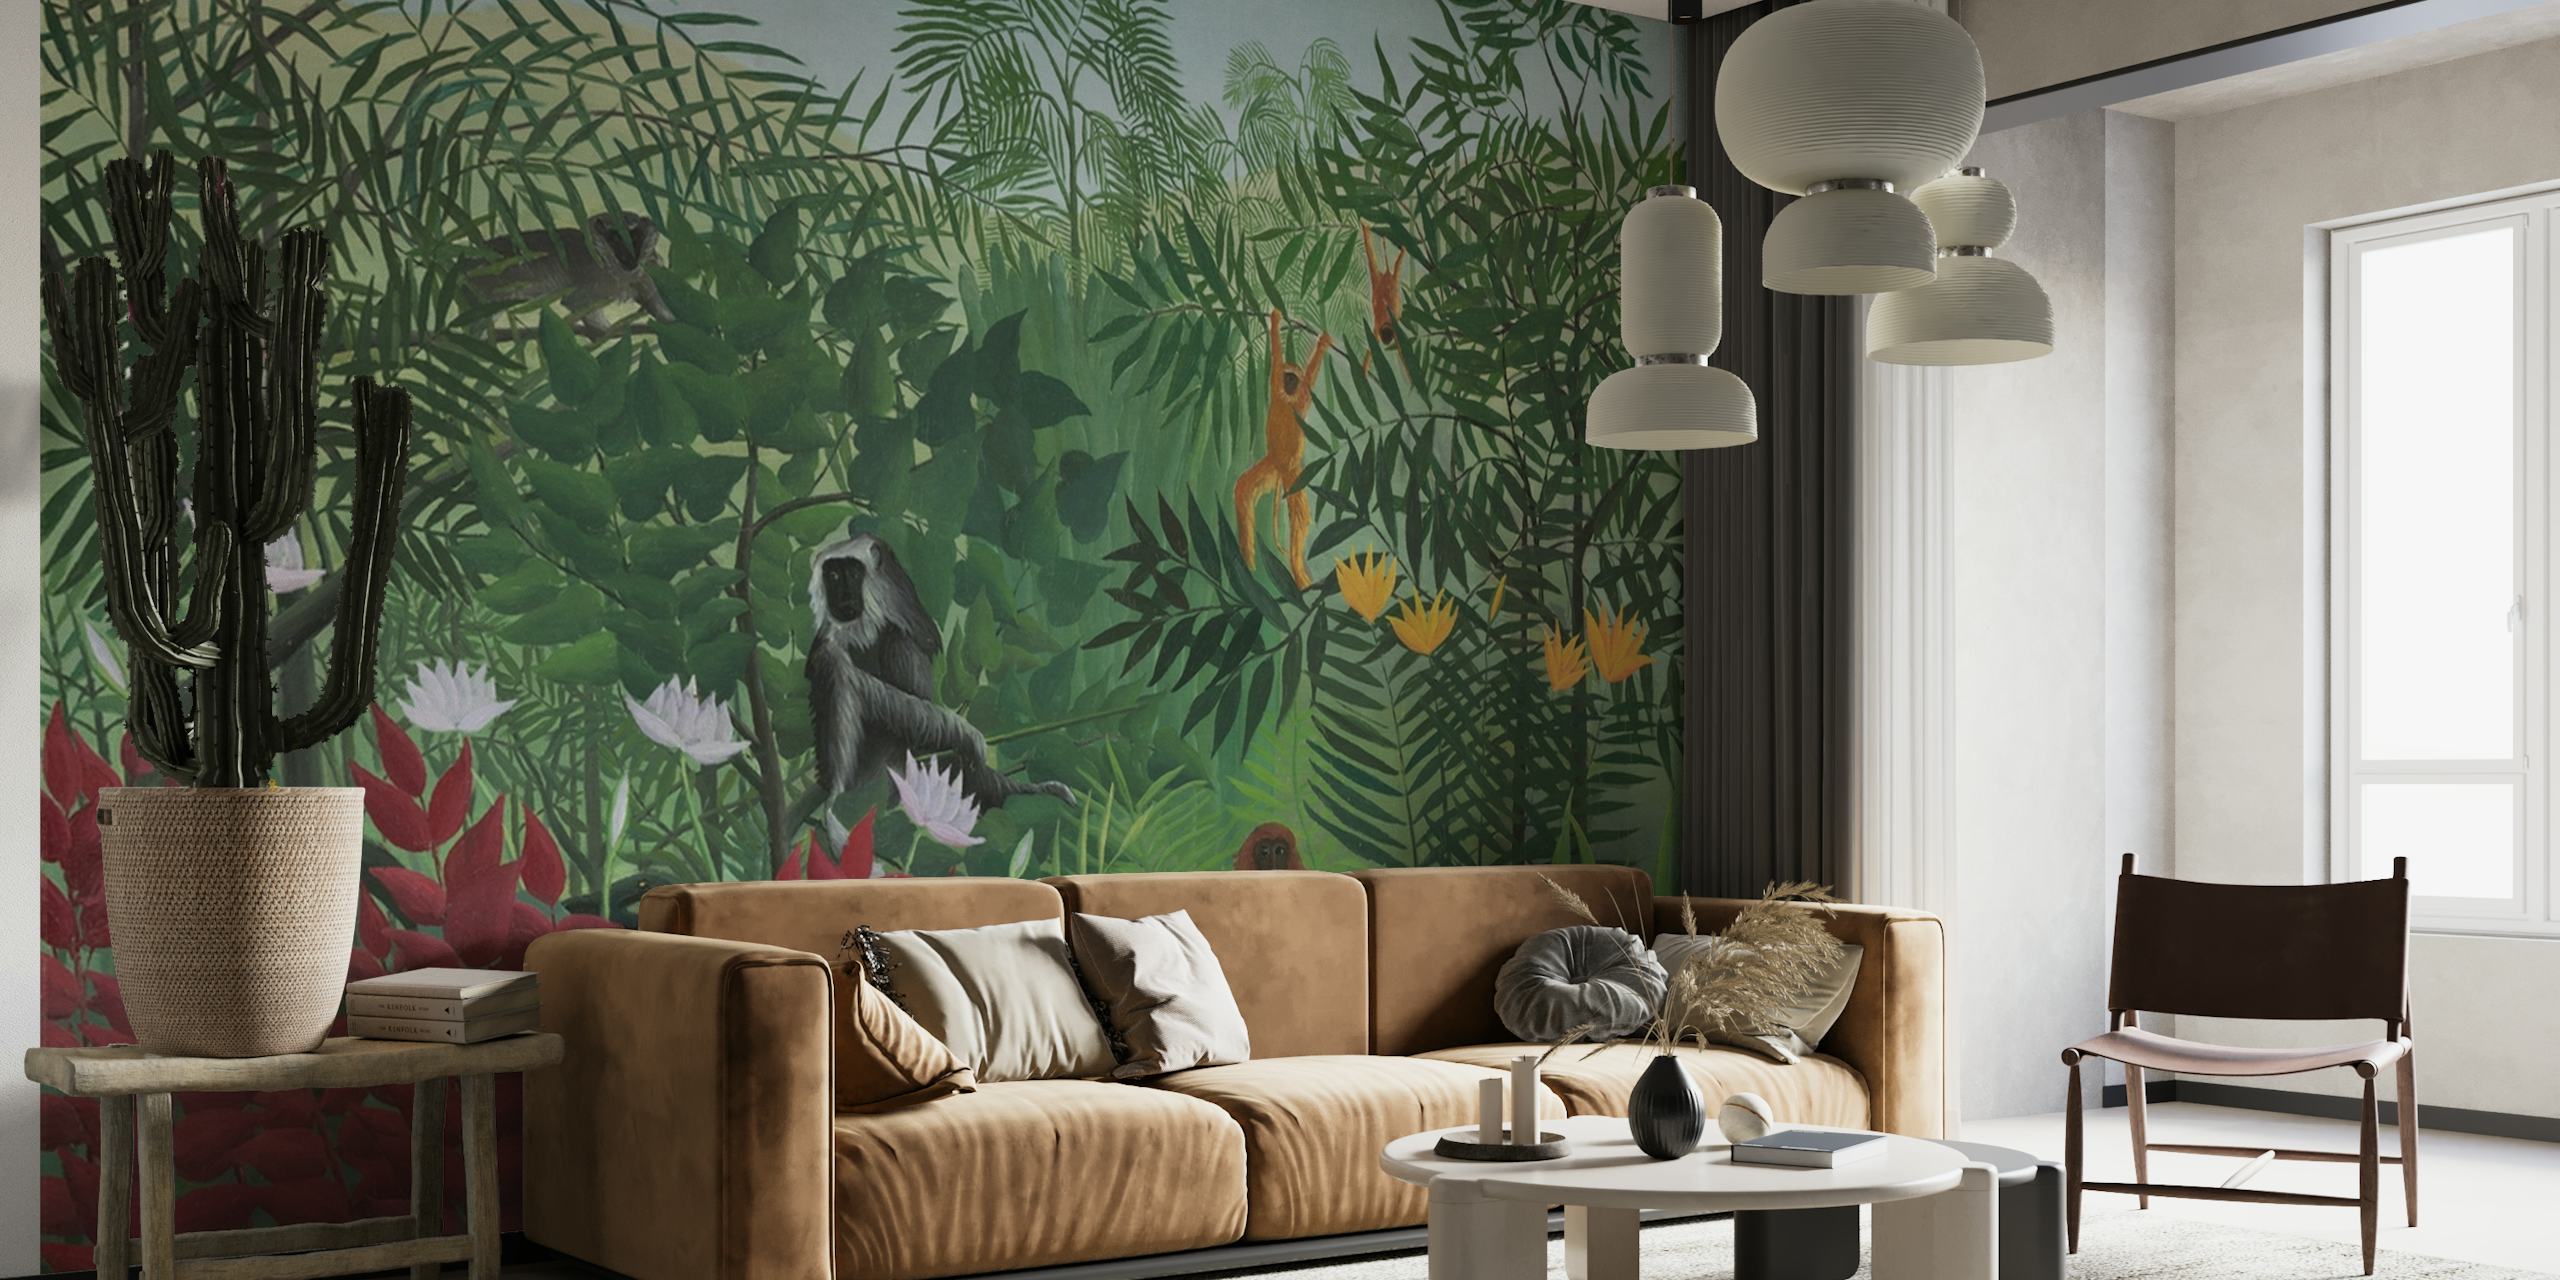 Fototapet som föreställer en tropisk skogsscen med apor, inspirerad av Henri Rousseaus konststil.